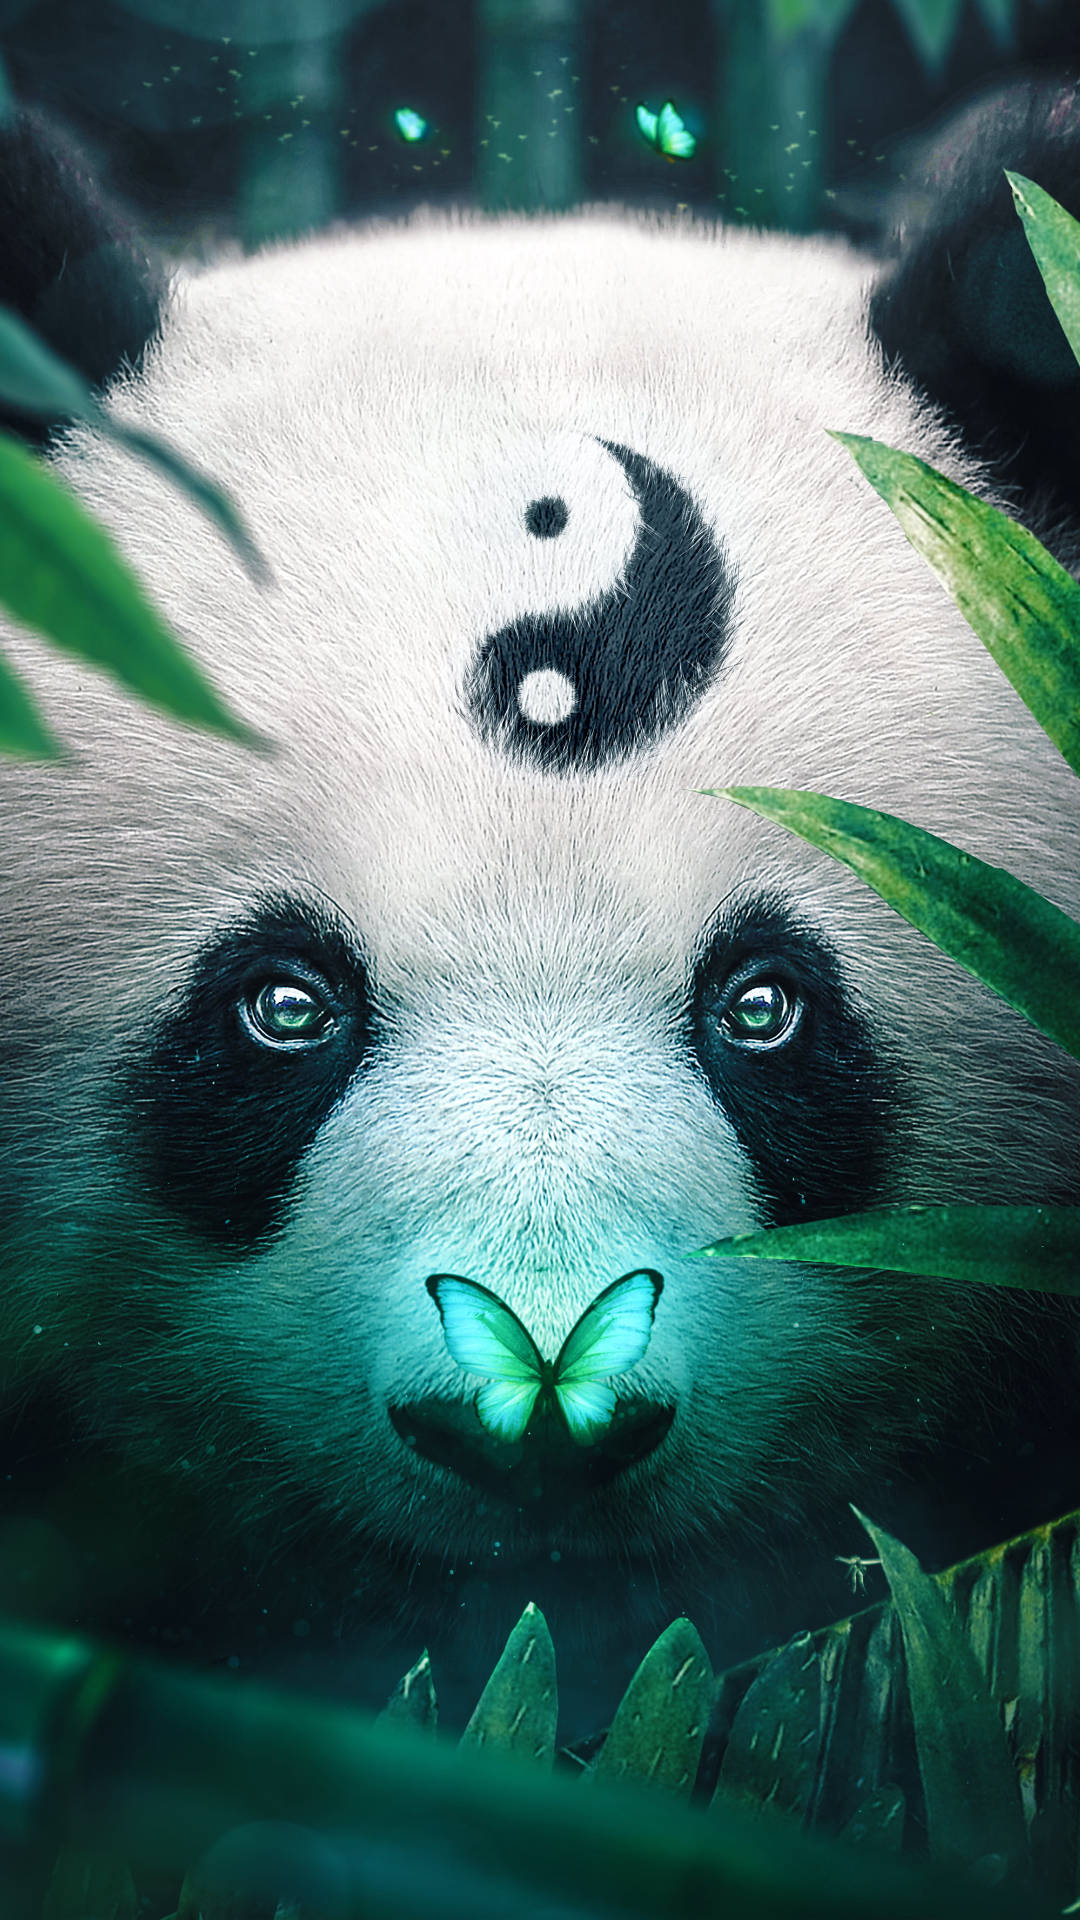 Free Panda Wallpaper Downloads, [400+] Panda Wallpapers for FREE |  